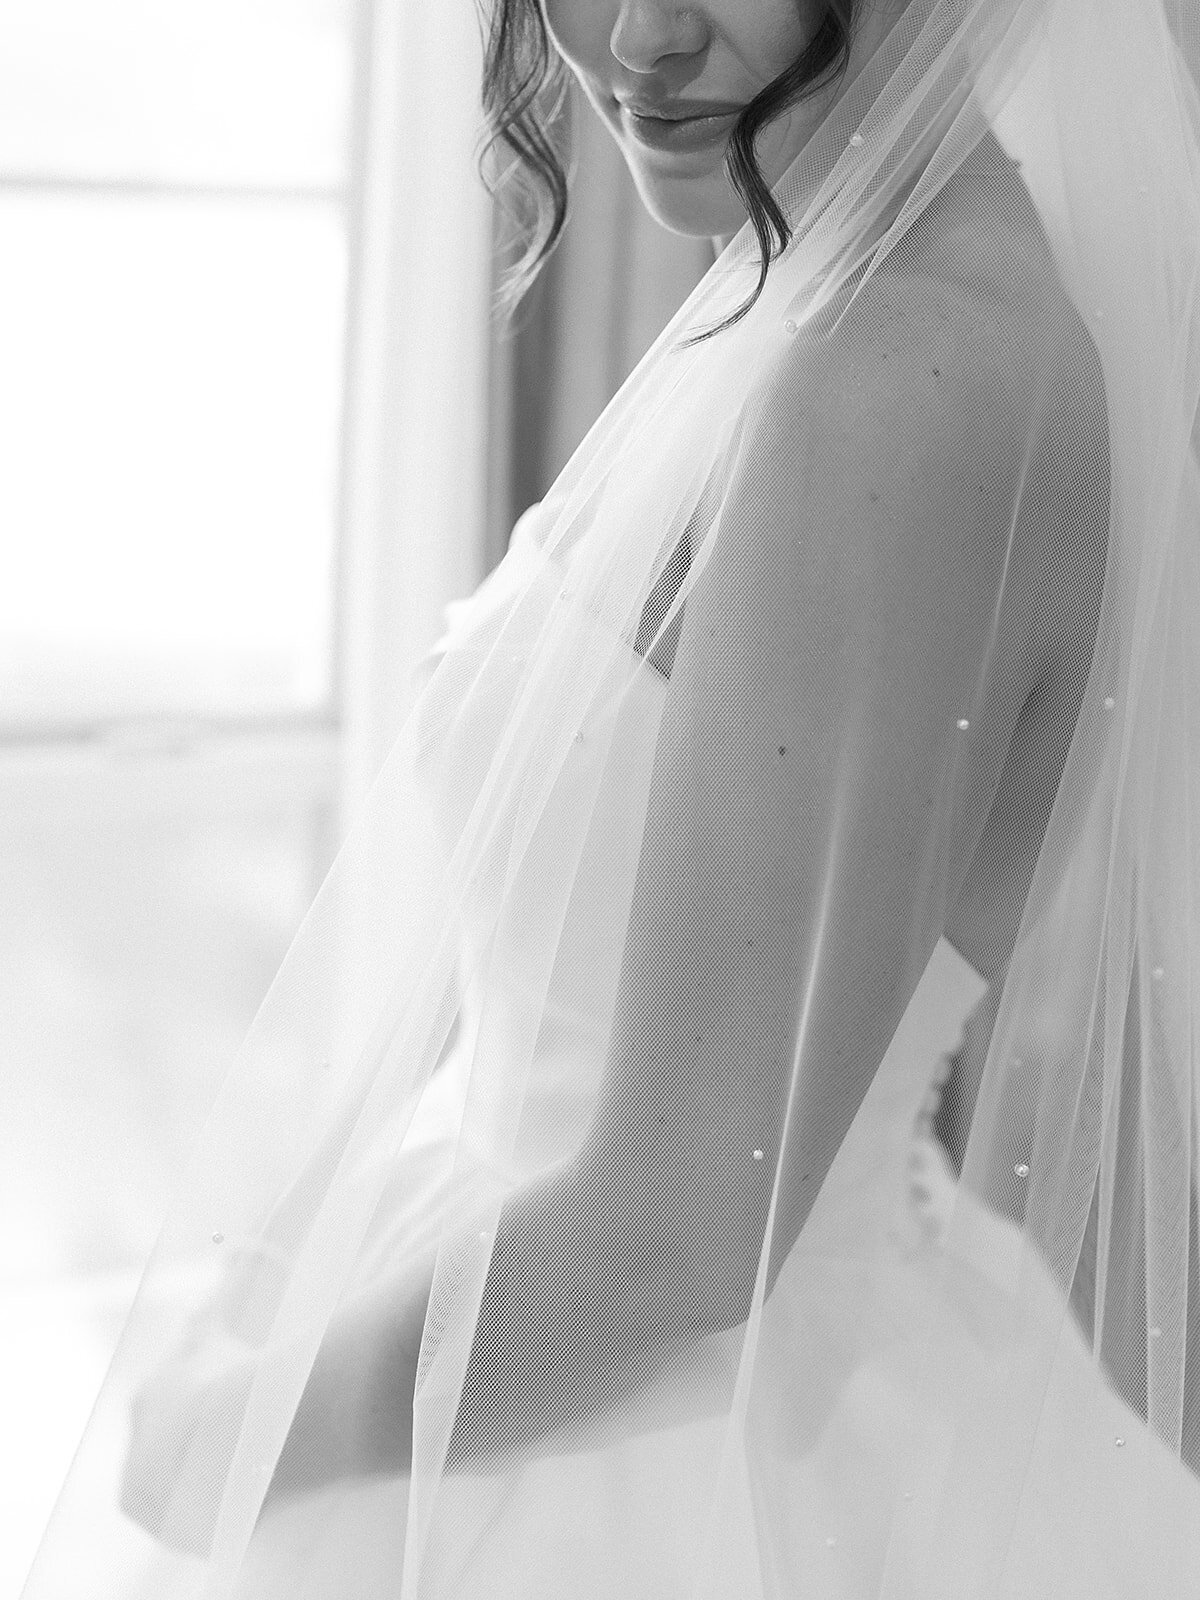 B-P-FE-Wedding-Aurelia-Baca-Photography-9957-2